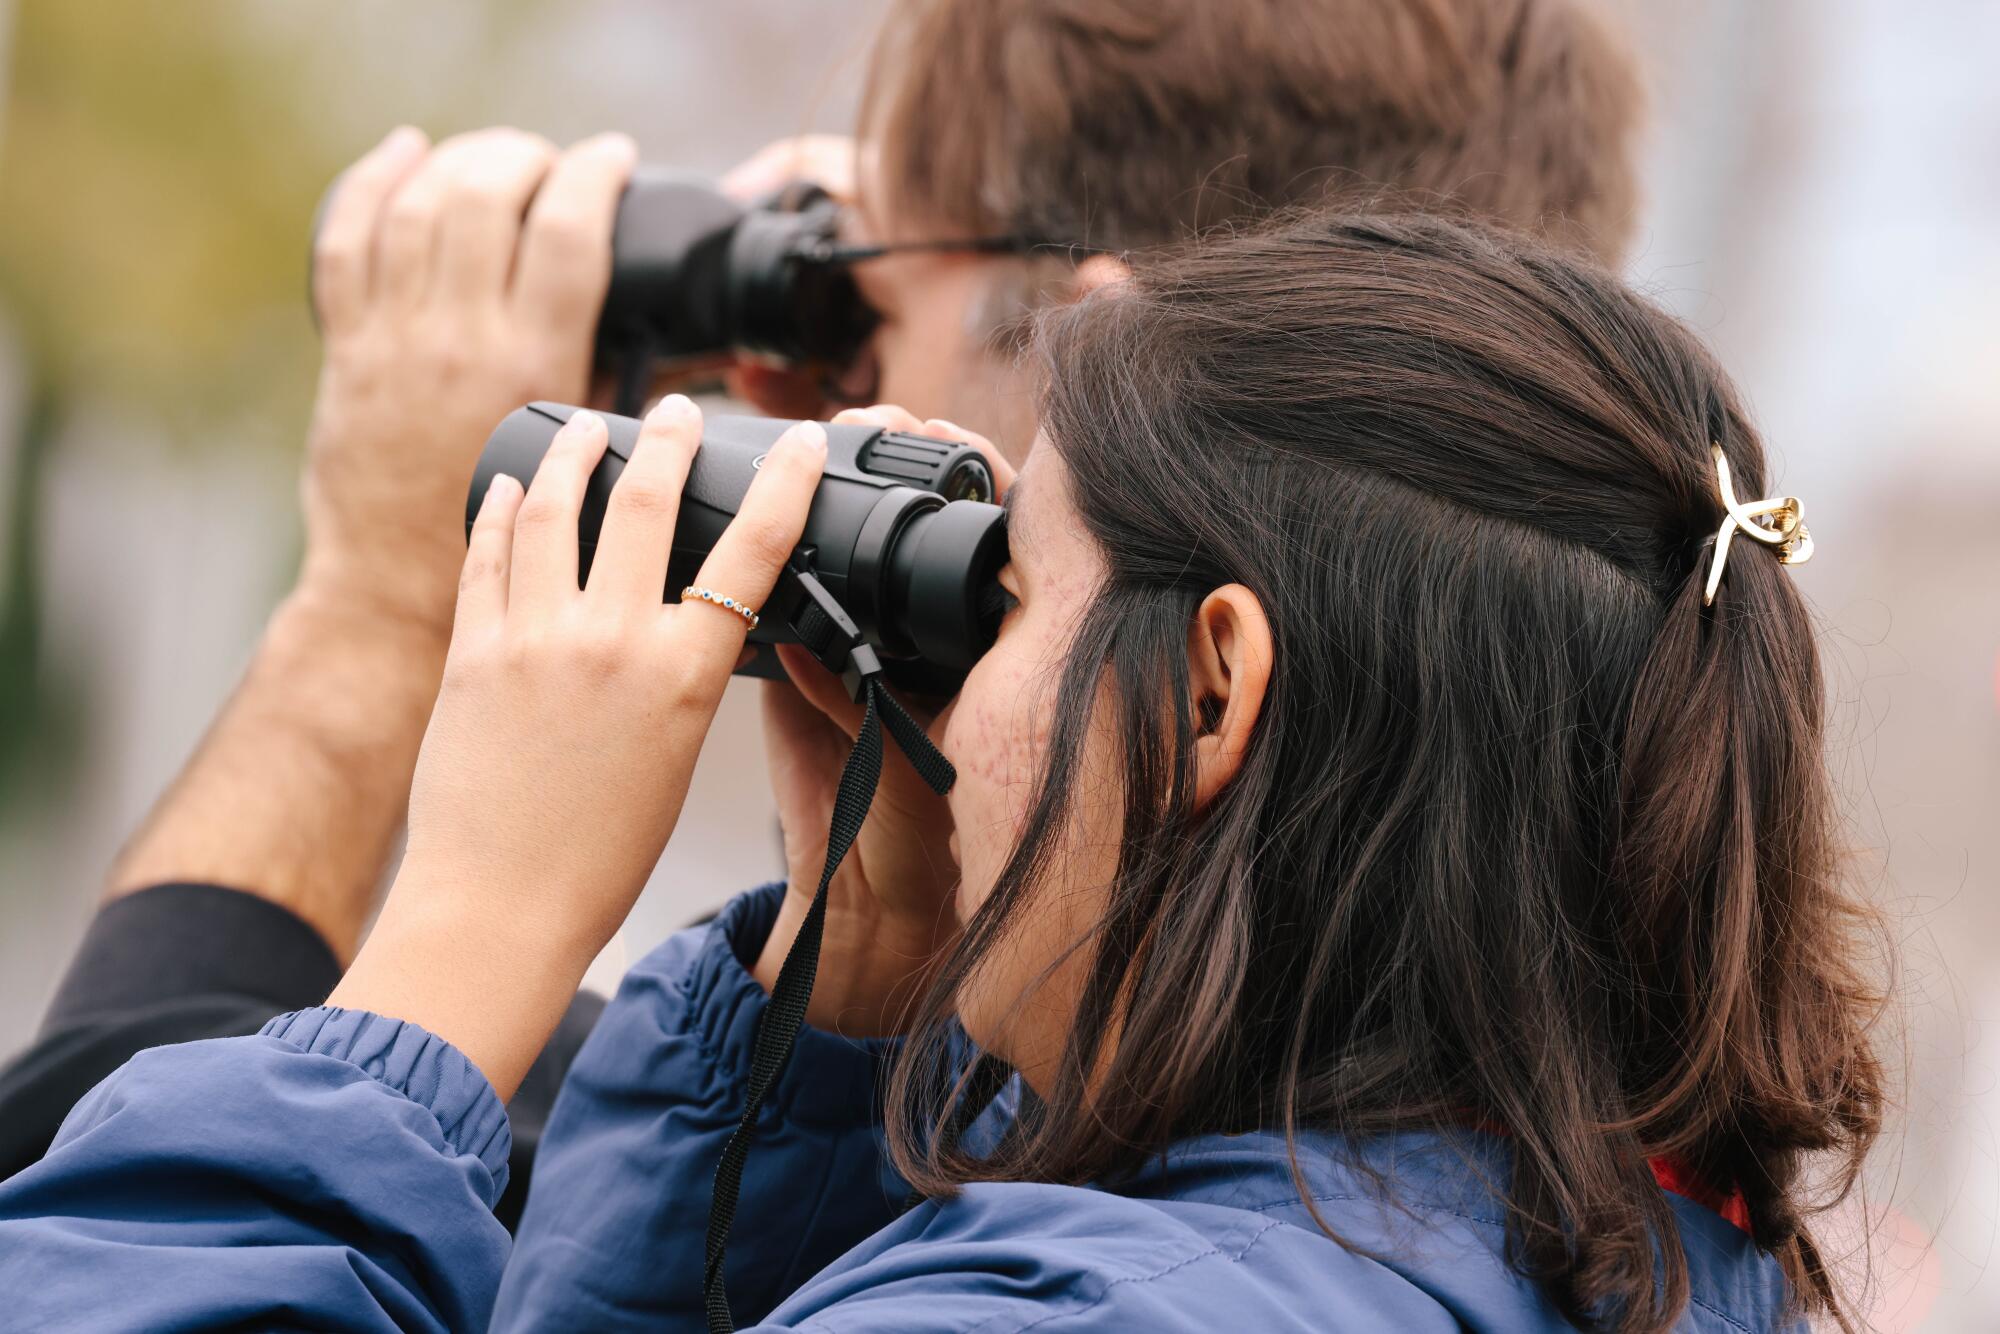 A man and a woman look through binoculars.